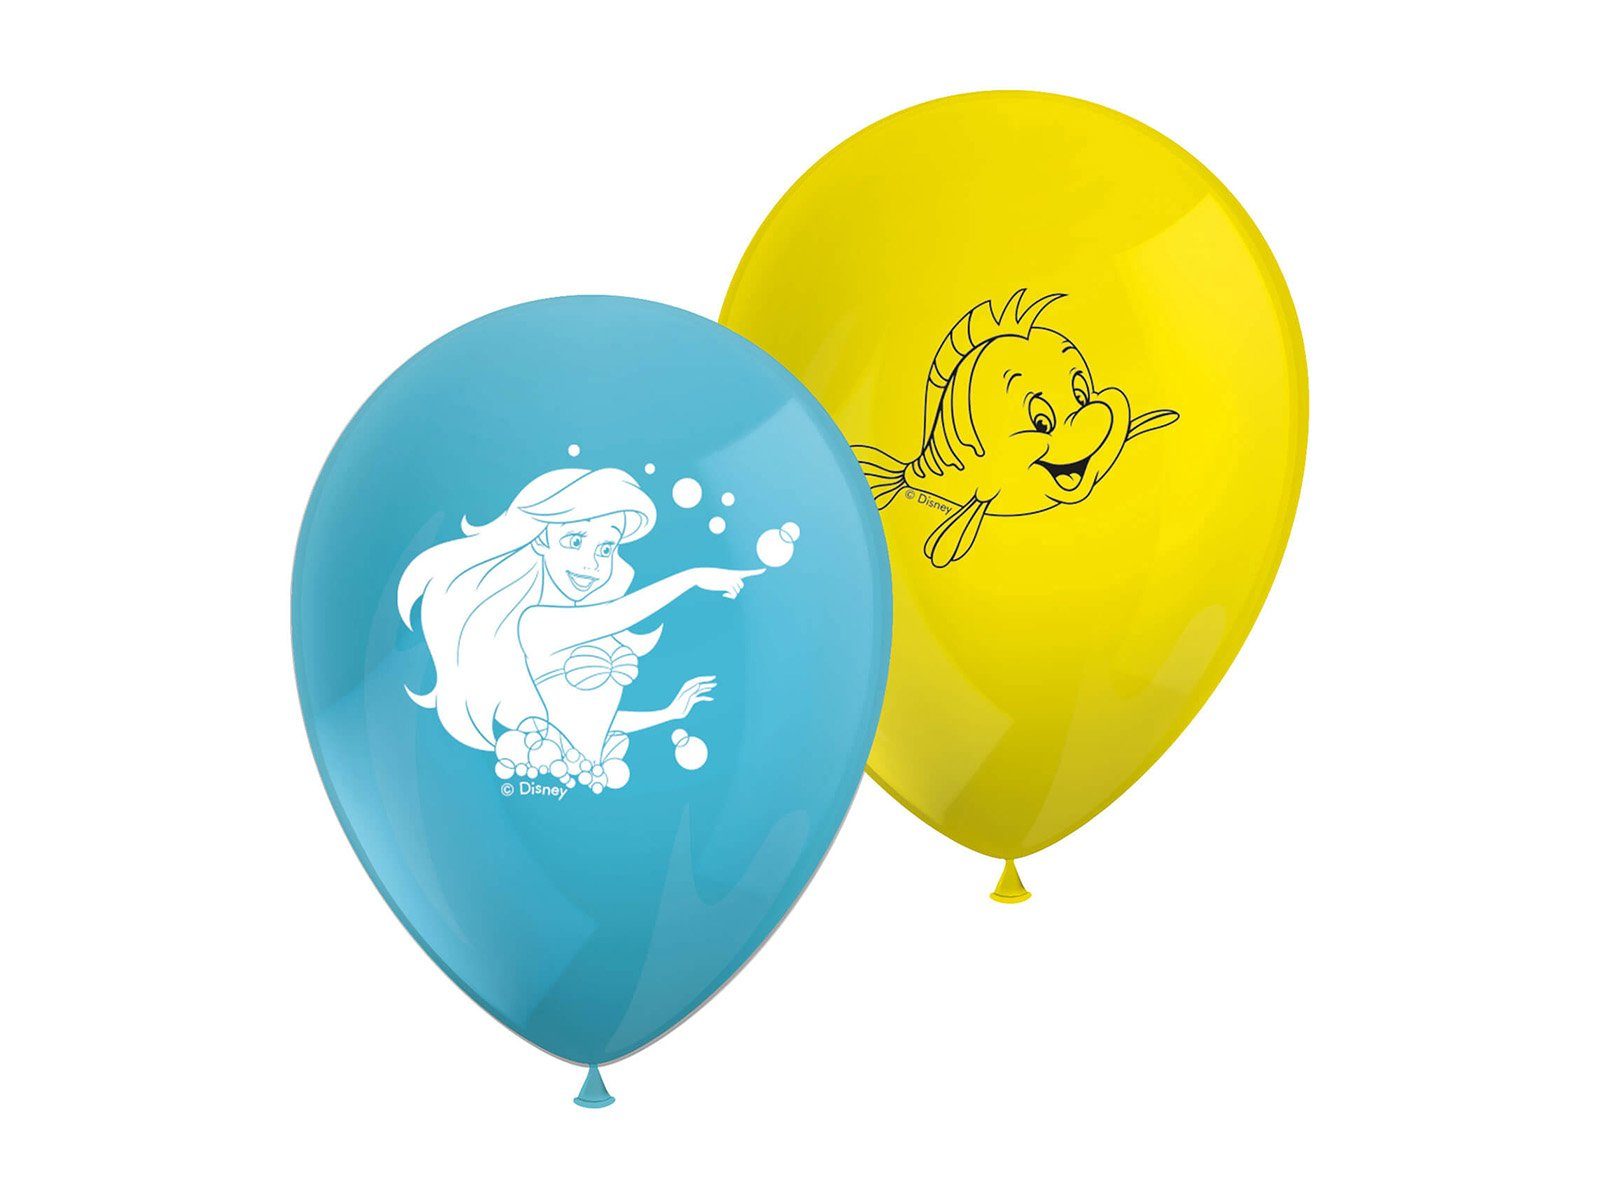 Festivalartikel Luftballon Arielle die Meerjungfrau LUFTBALLONS GEBURTSTAG LUFTBALLON SET 8 Stk